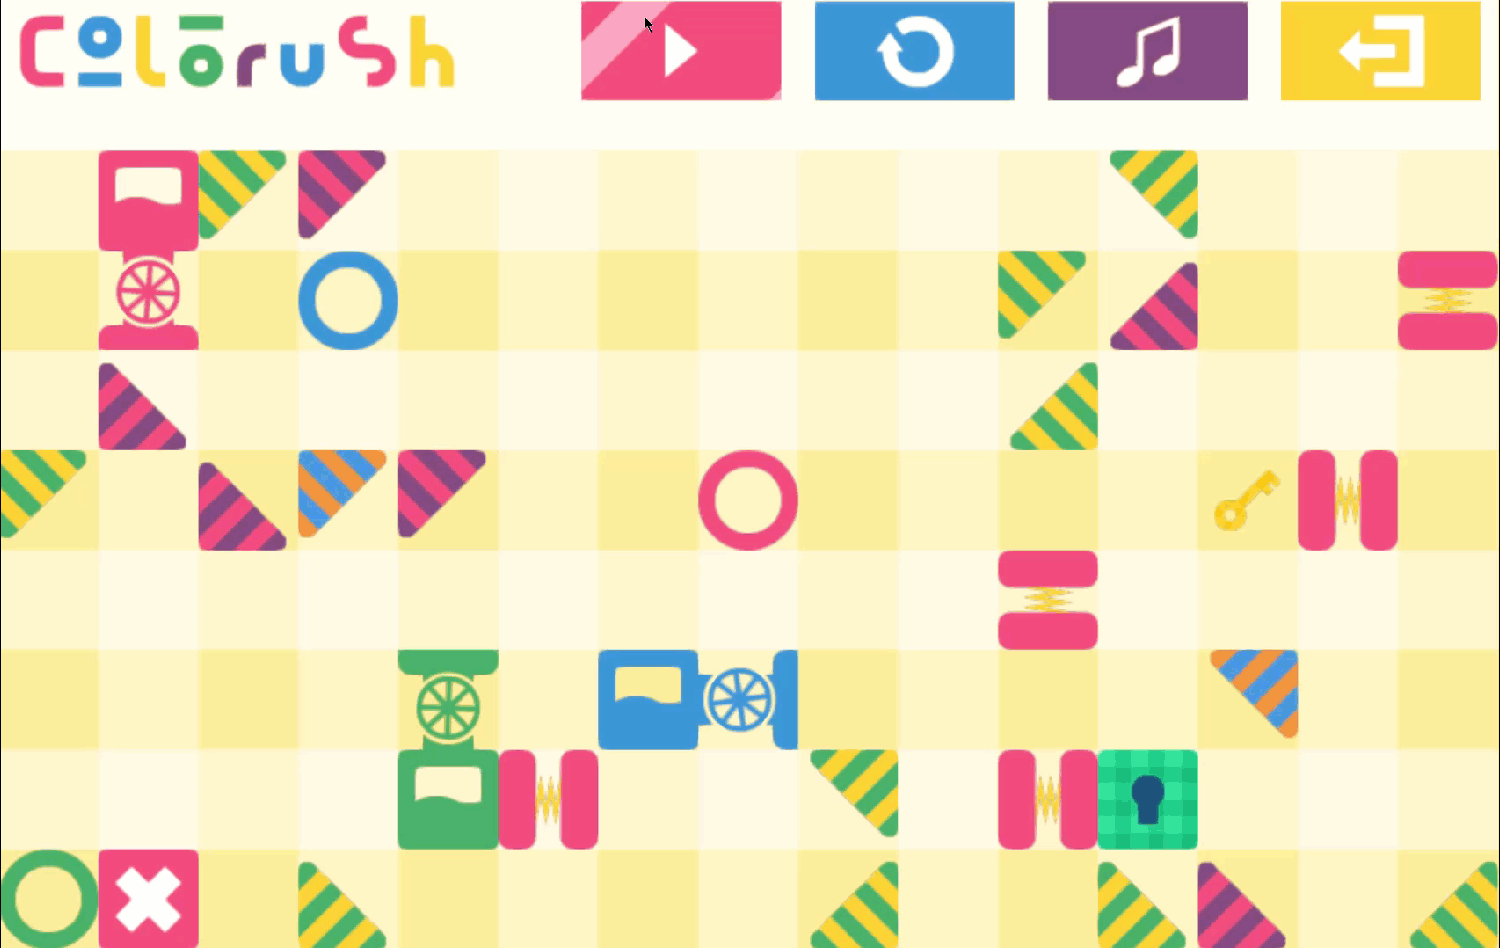 Colorush Game Level 21 Screenshot.